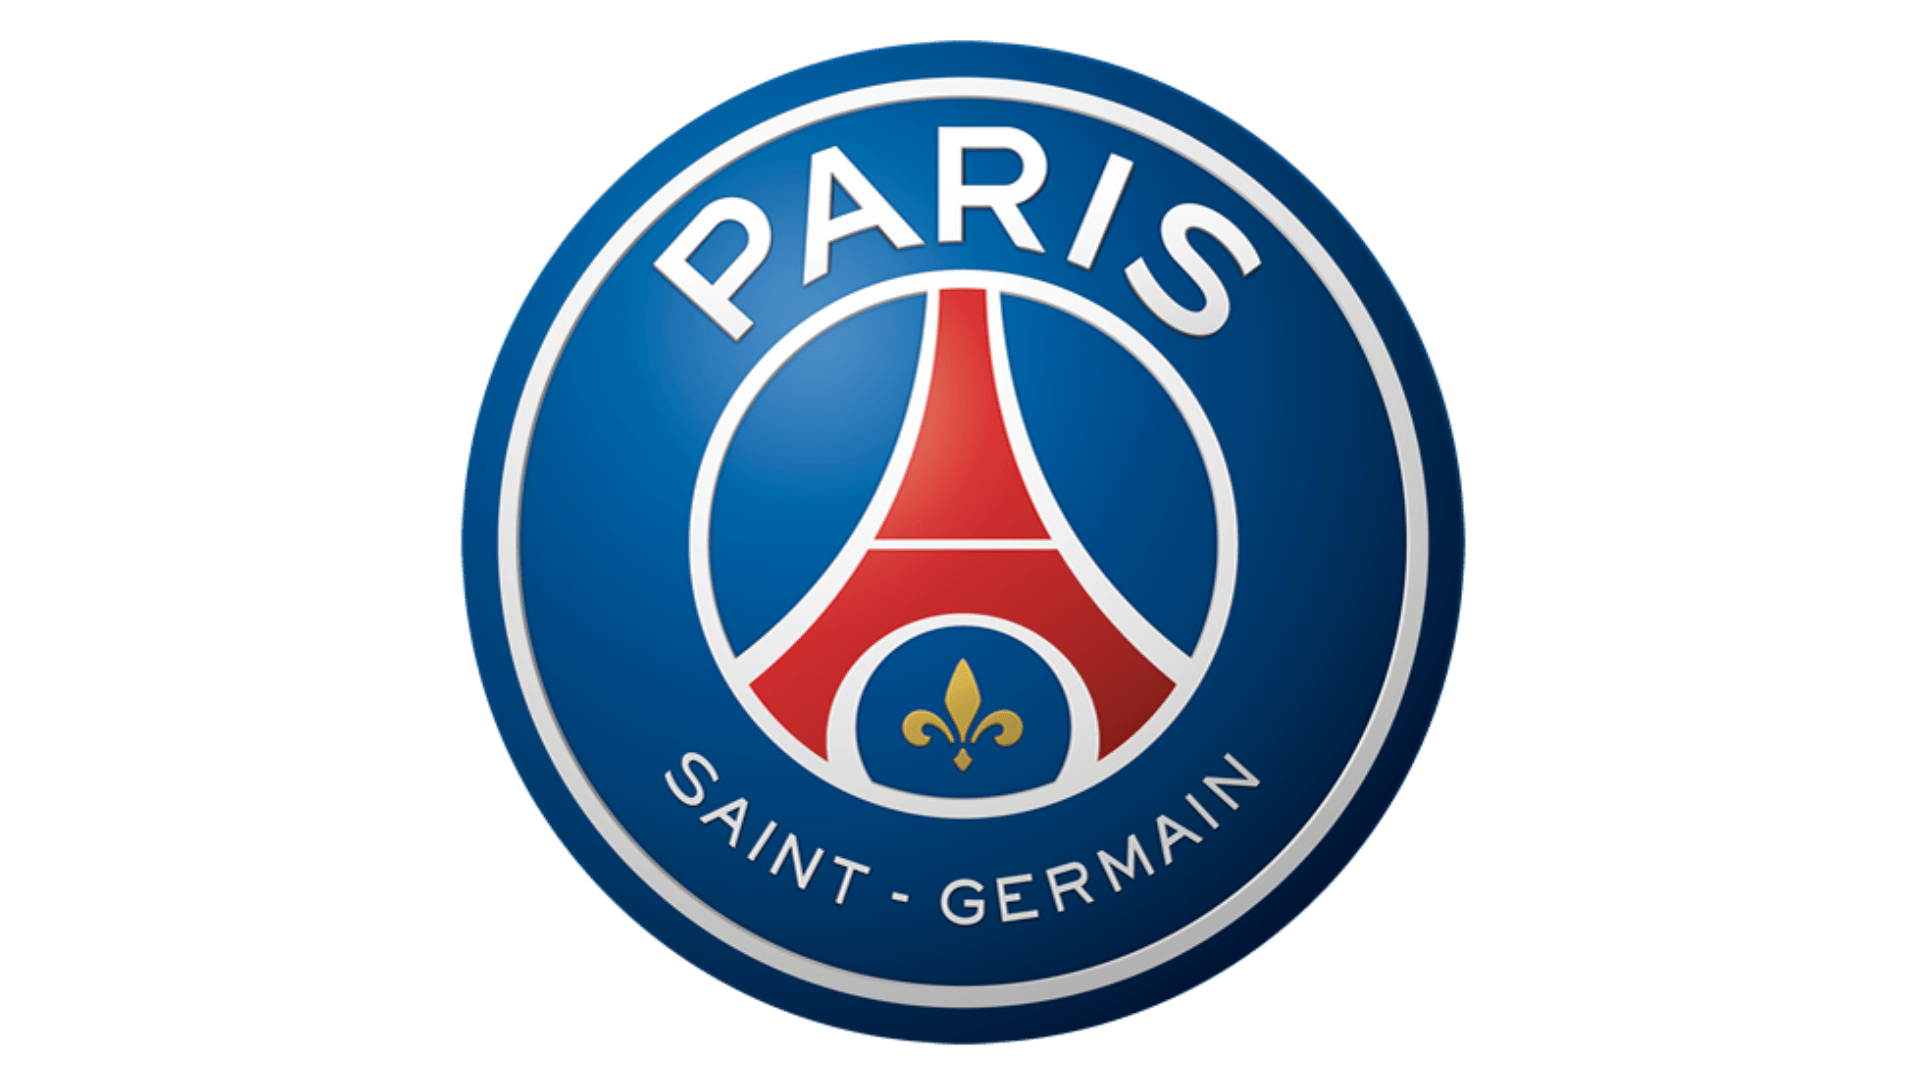 Paris Saint Germain Logo - PSG Logo, Paris Saint Germain symbol, meaning